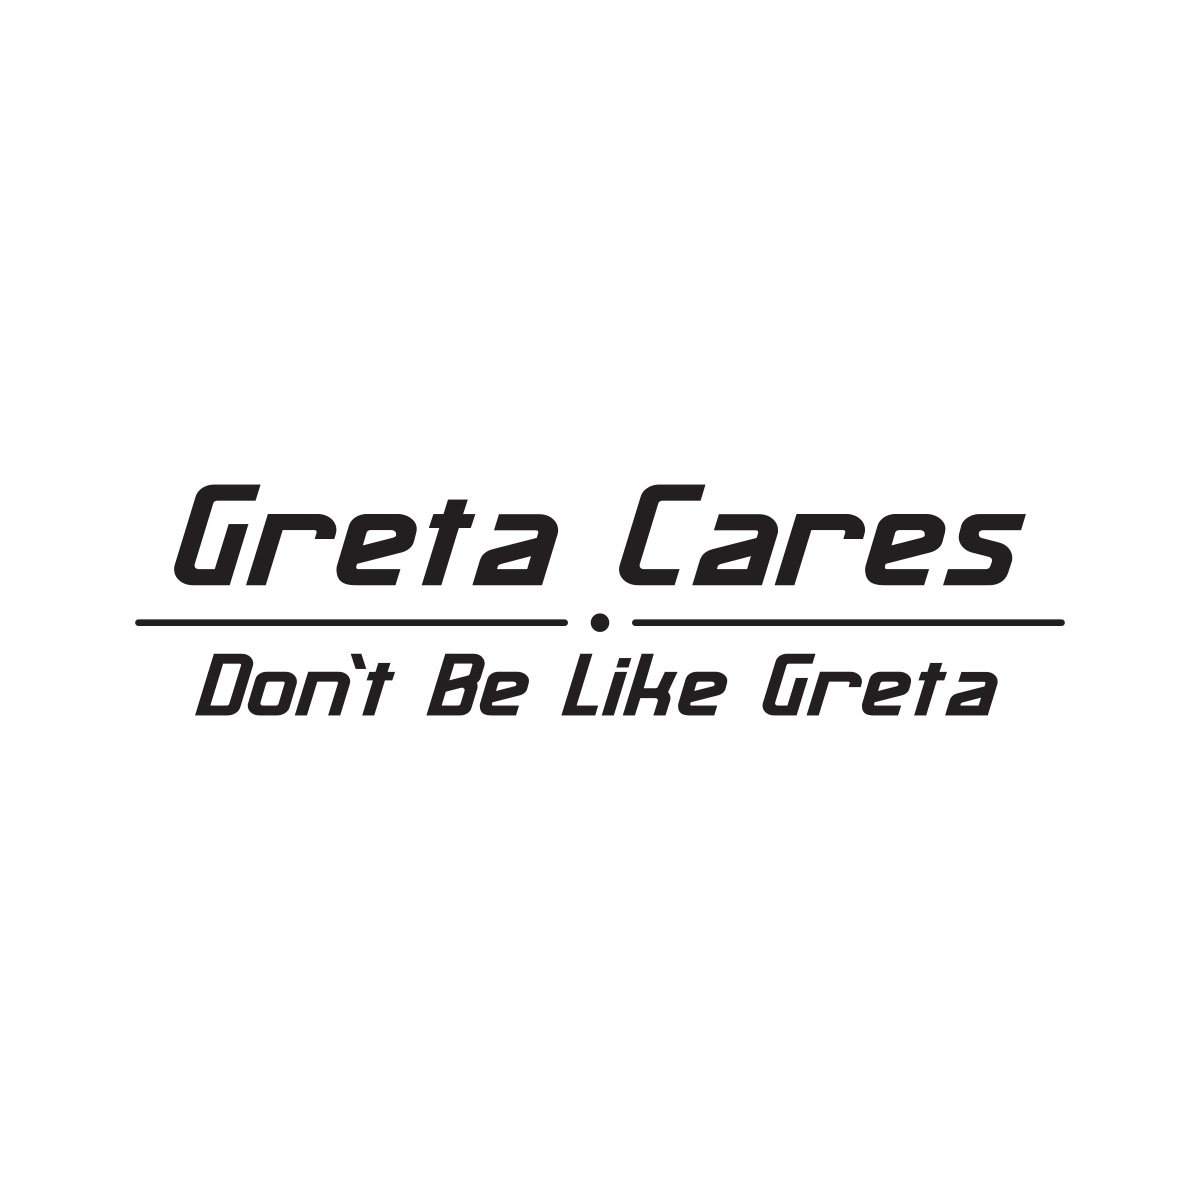 Greta Cares - Dont be like Greta